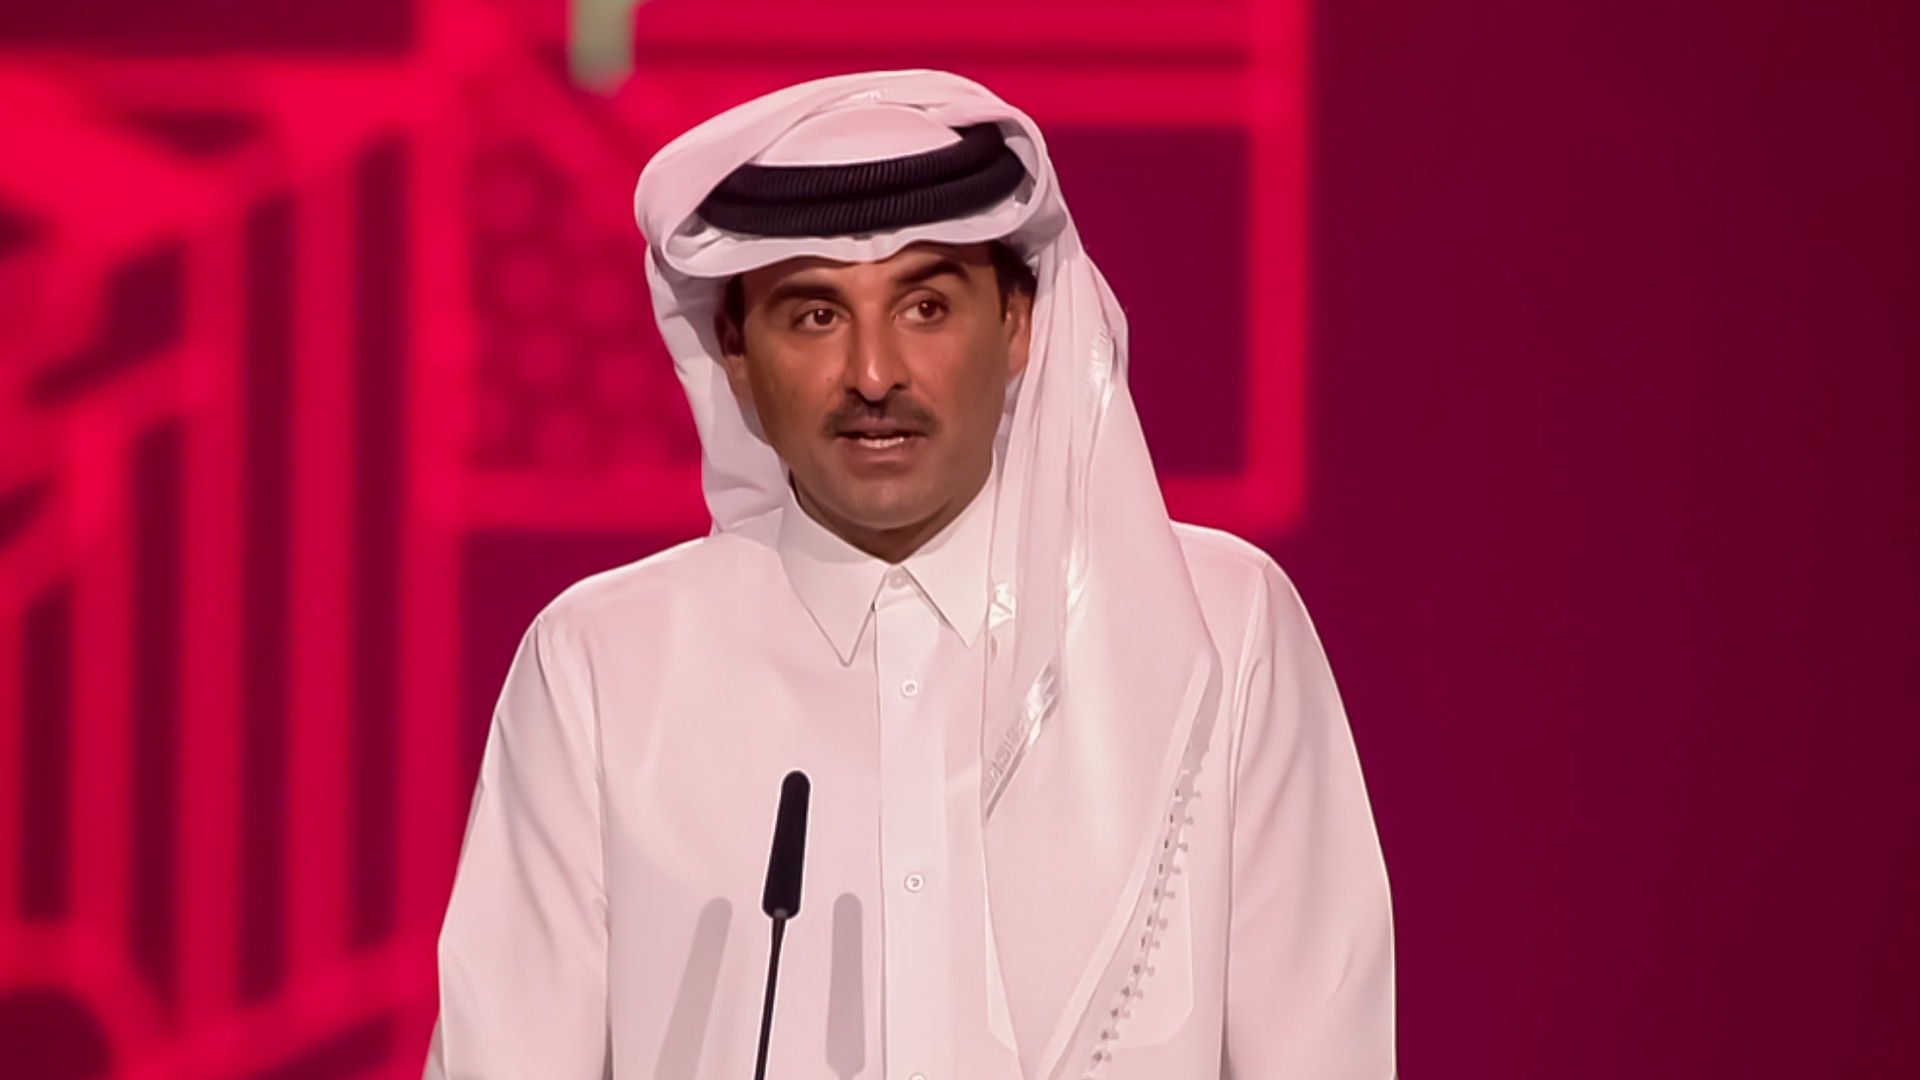 Qatar to face Ecuador in FIFA World Cup opener